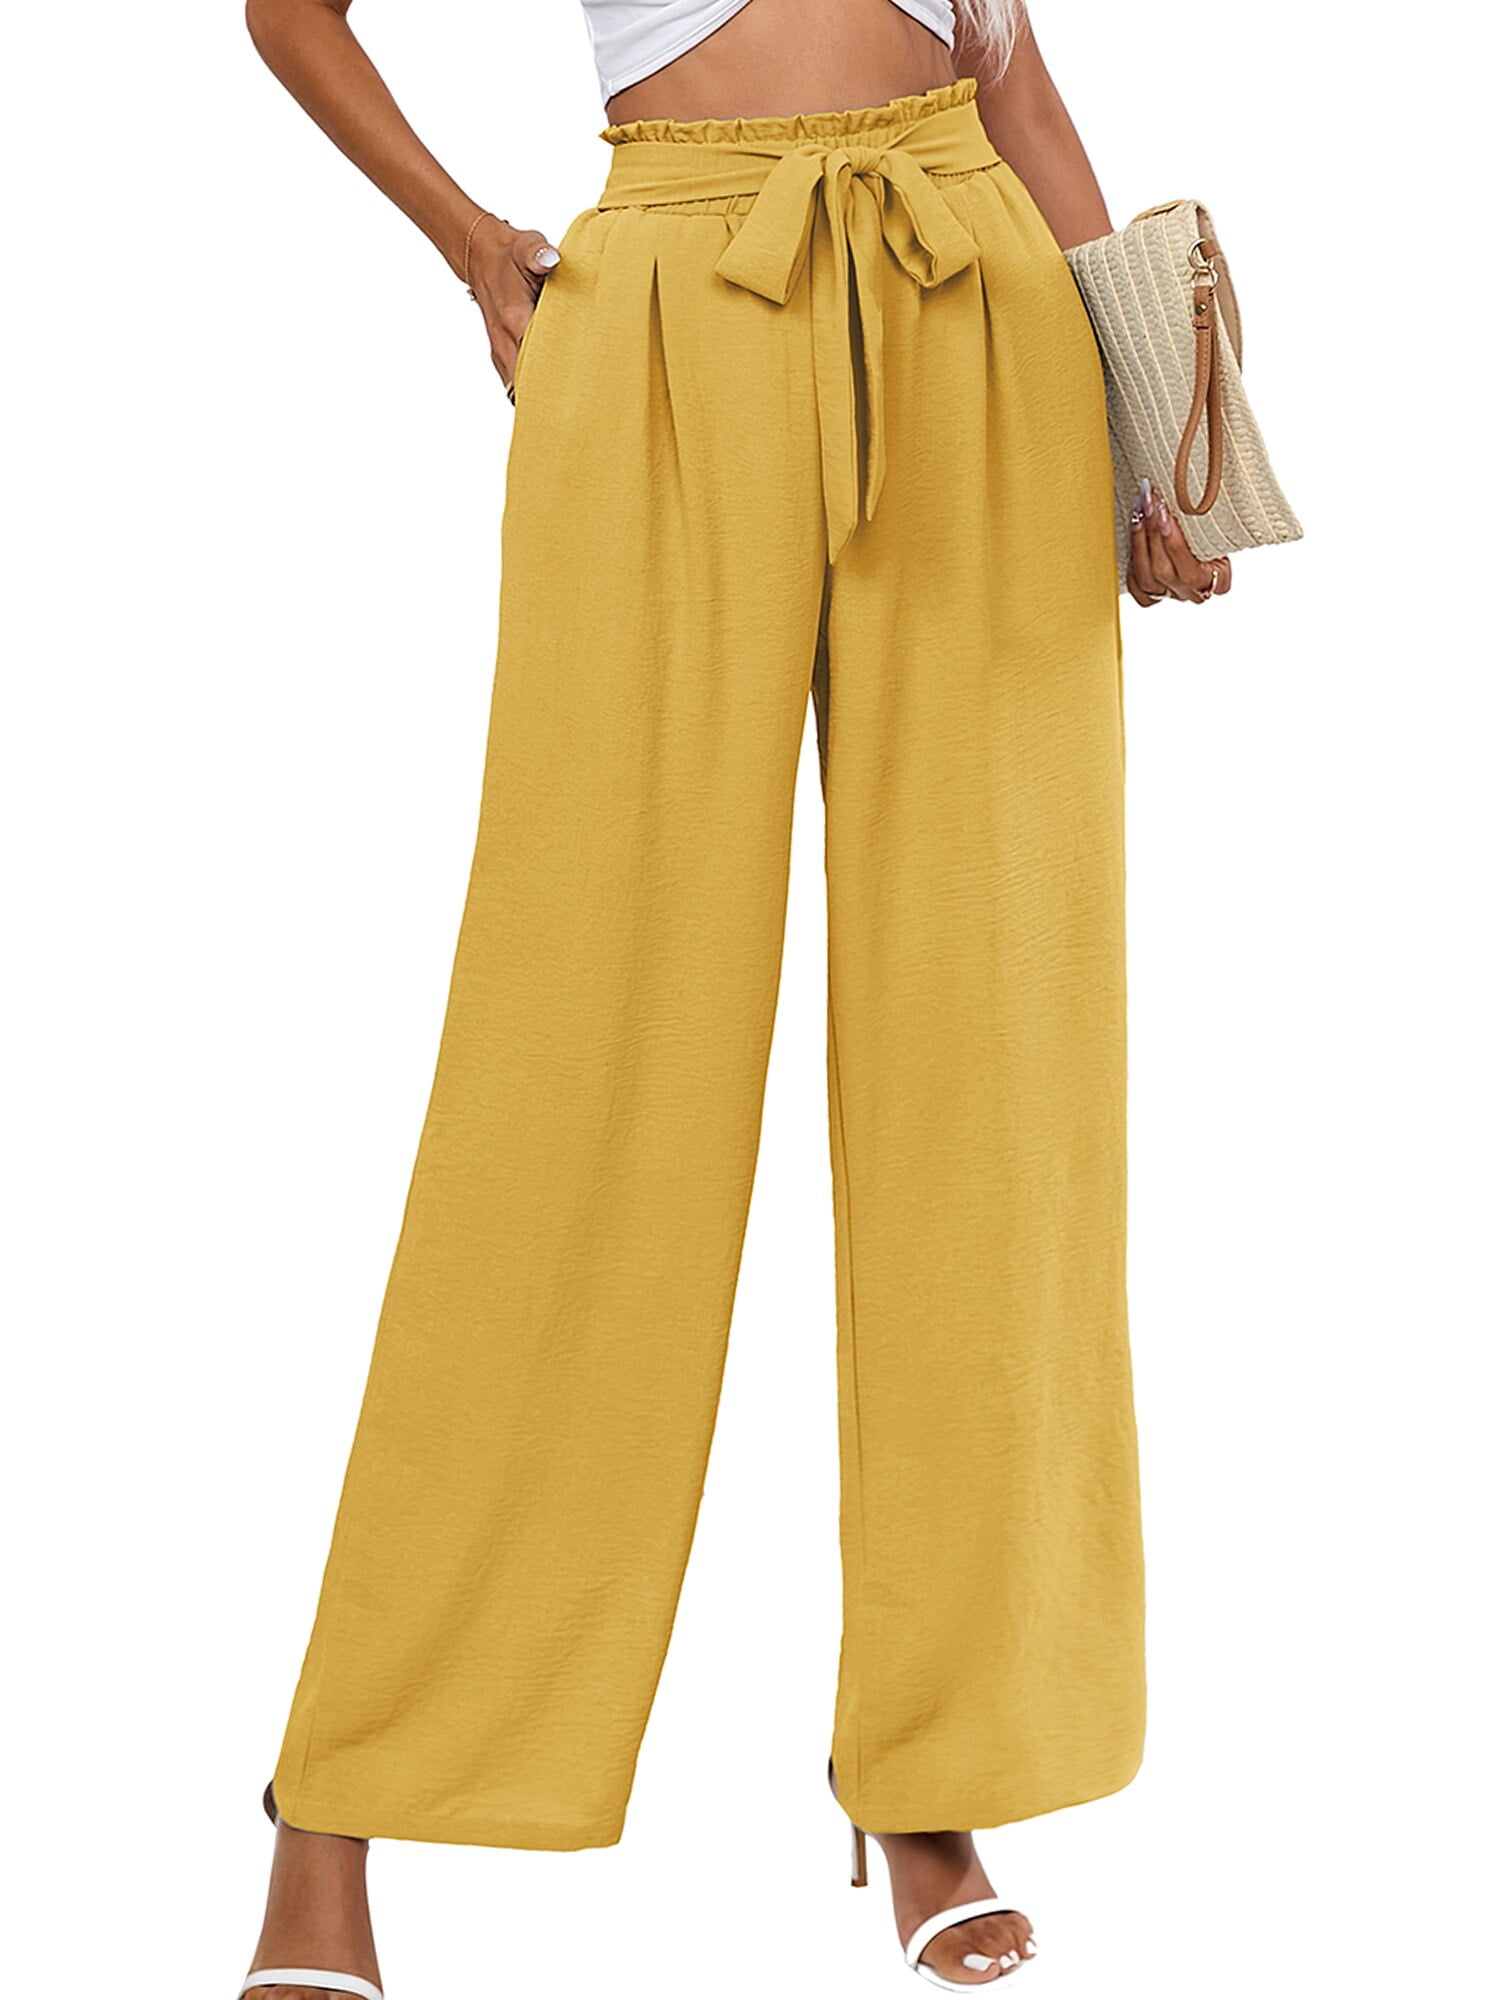 33 Breezy Summer Pants That Are Just as Pretty as Dresses | Lightweight  linen pants, Lightweight pants, Pants